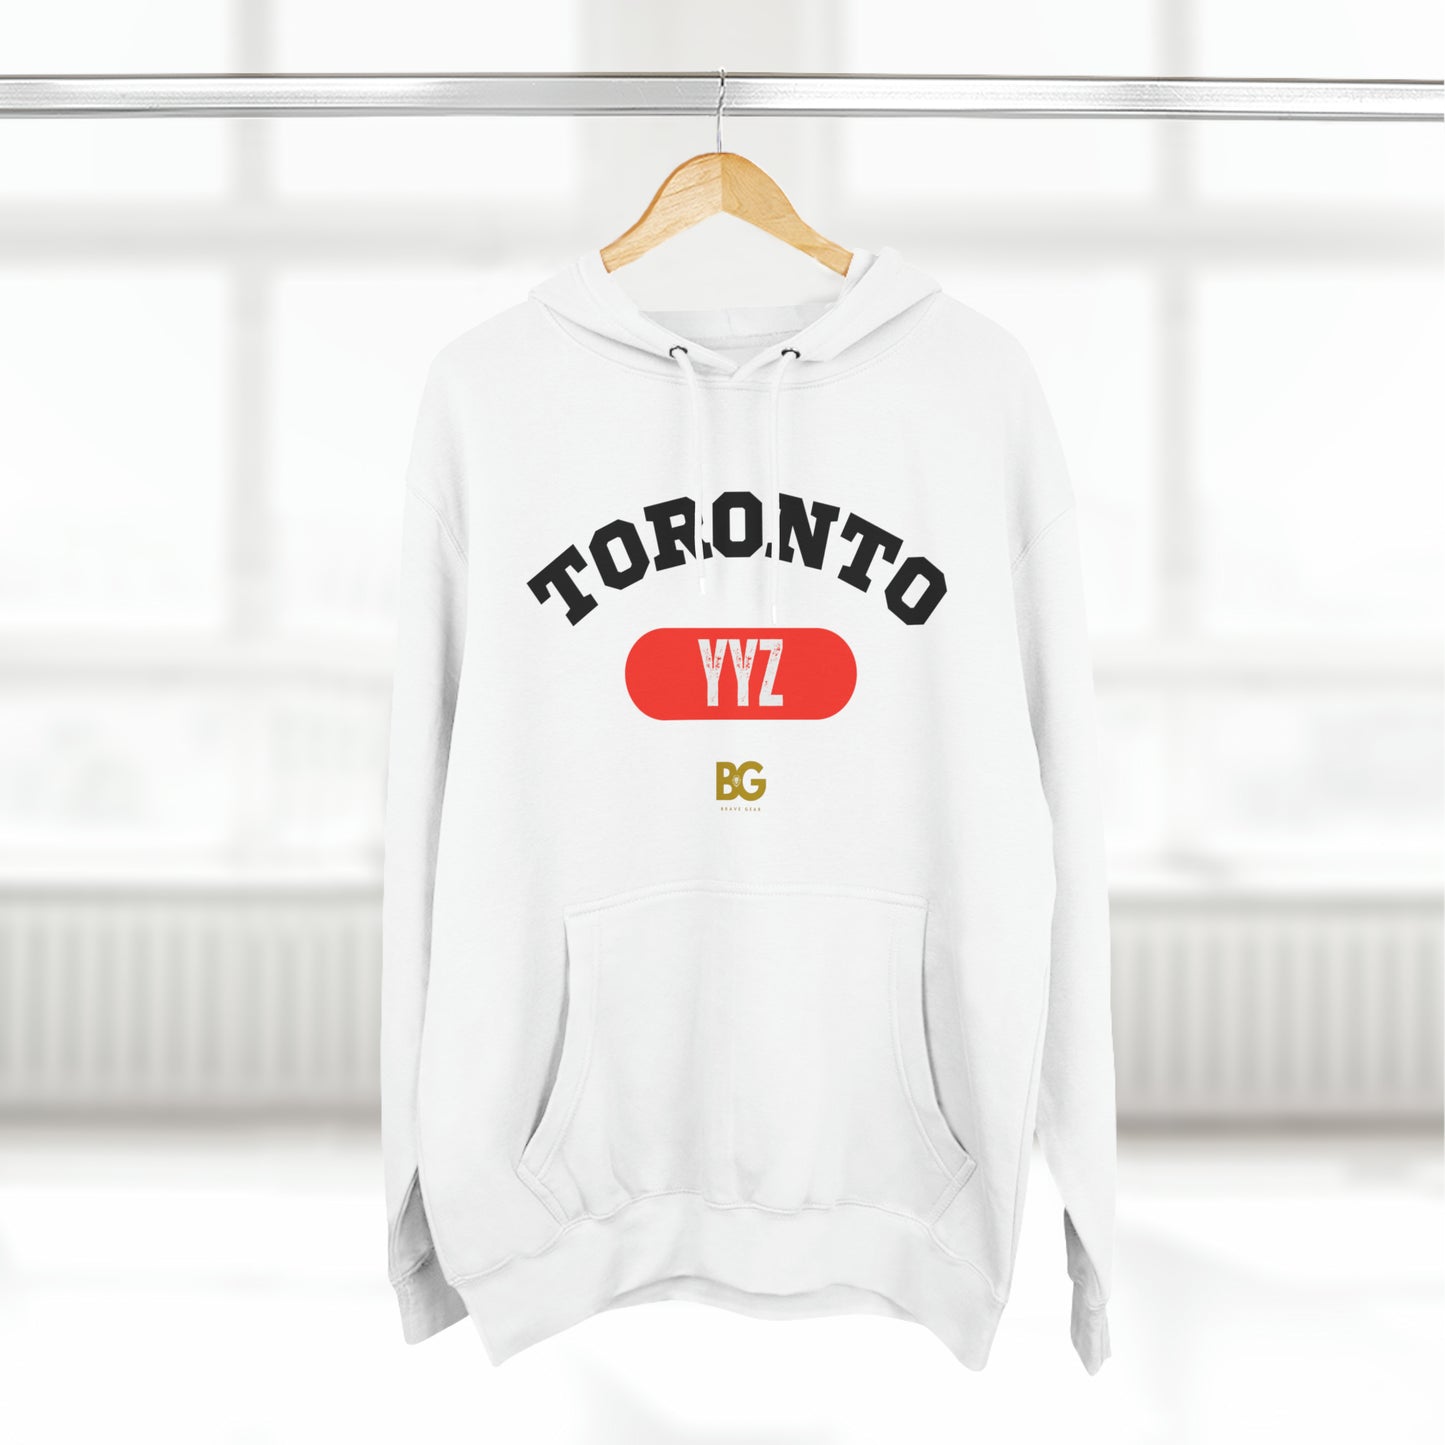 BG "Toronto YYZ" Premium Pullover Hoodie